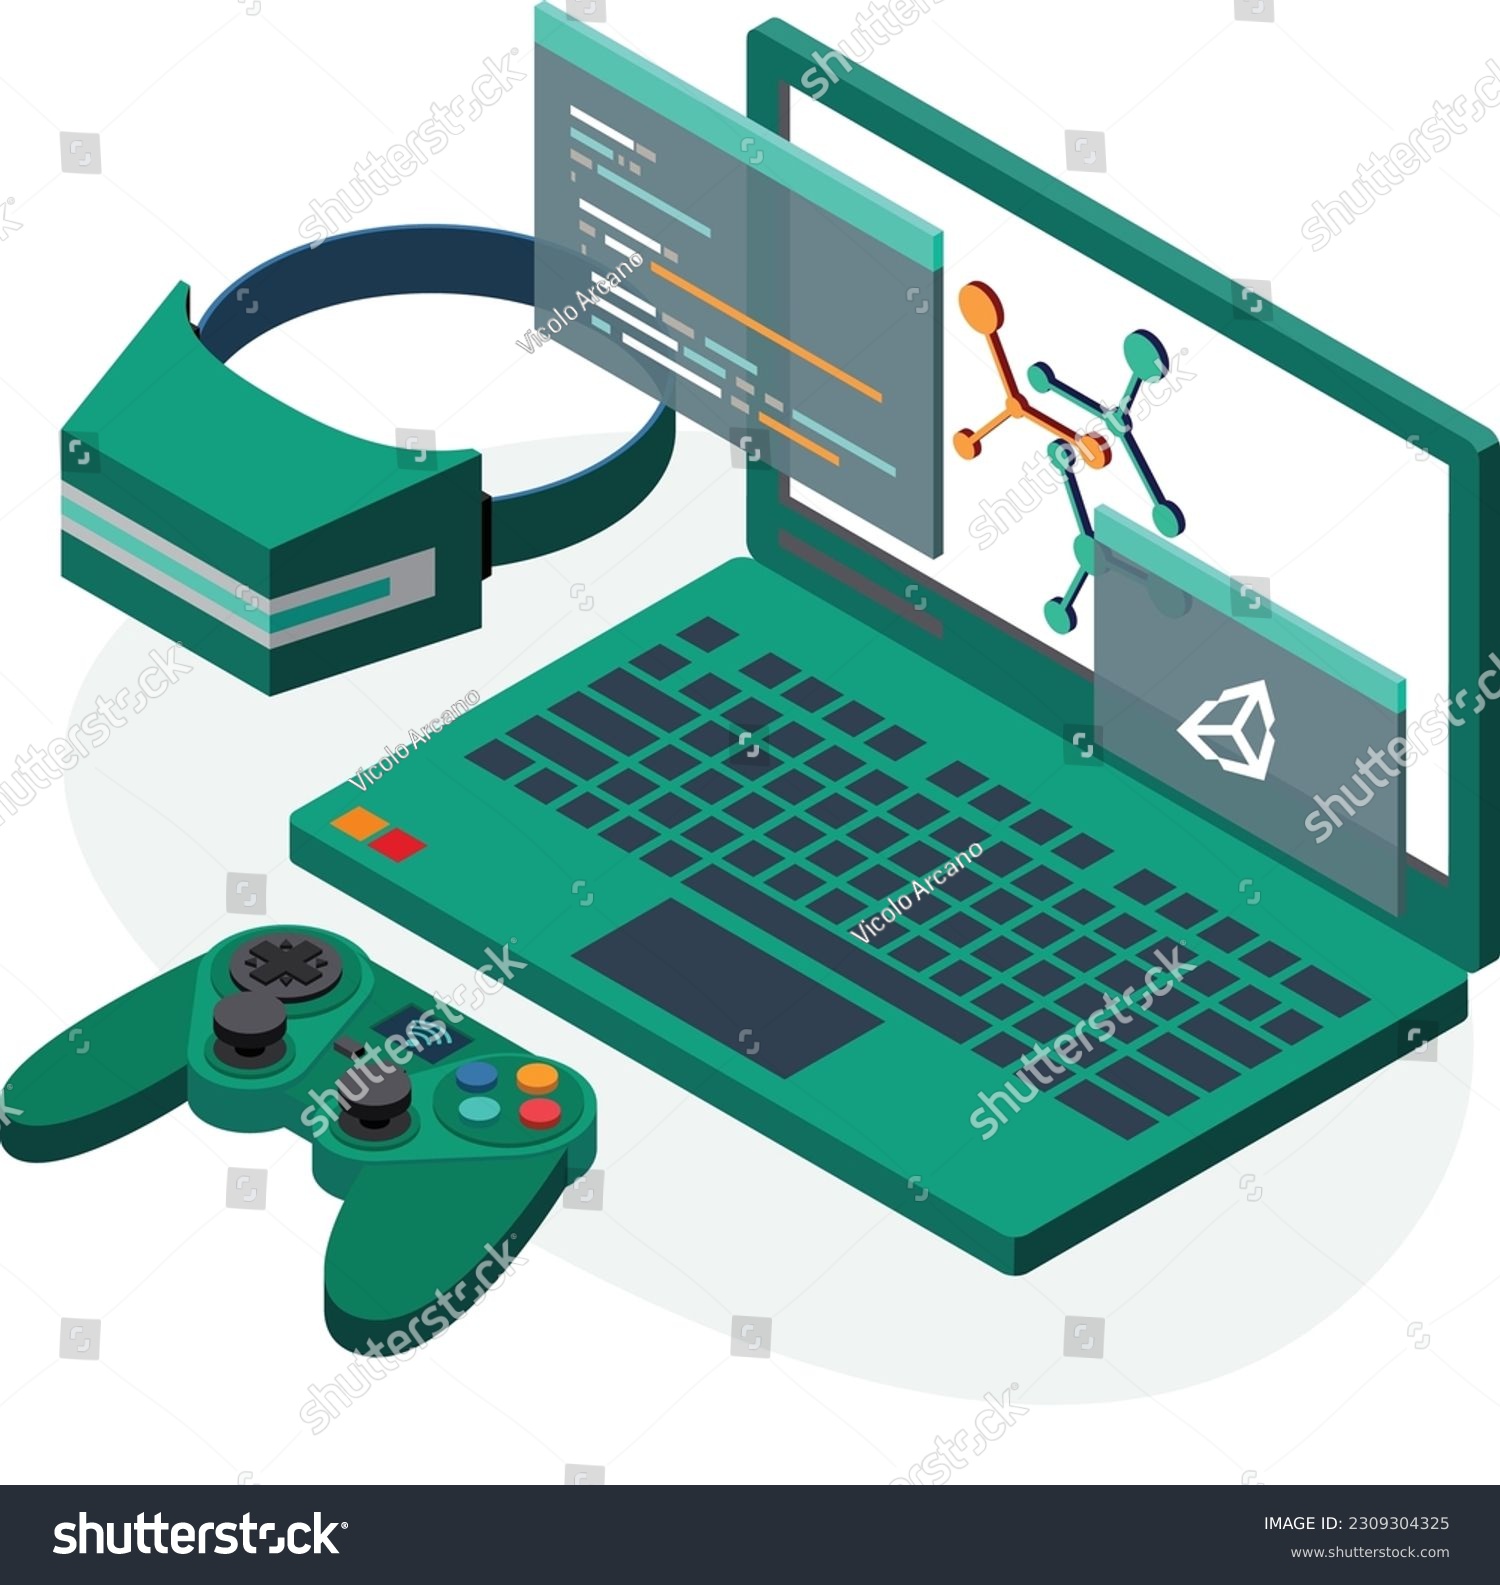 SVG of Game Development Isometric Logo Illustration. Unity VR Virtual Reality Game Controller Laptop Programming Software Development. svg